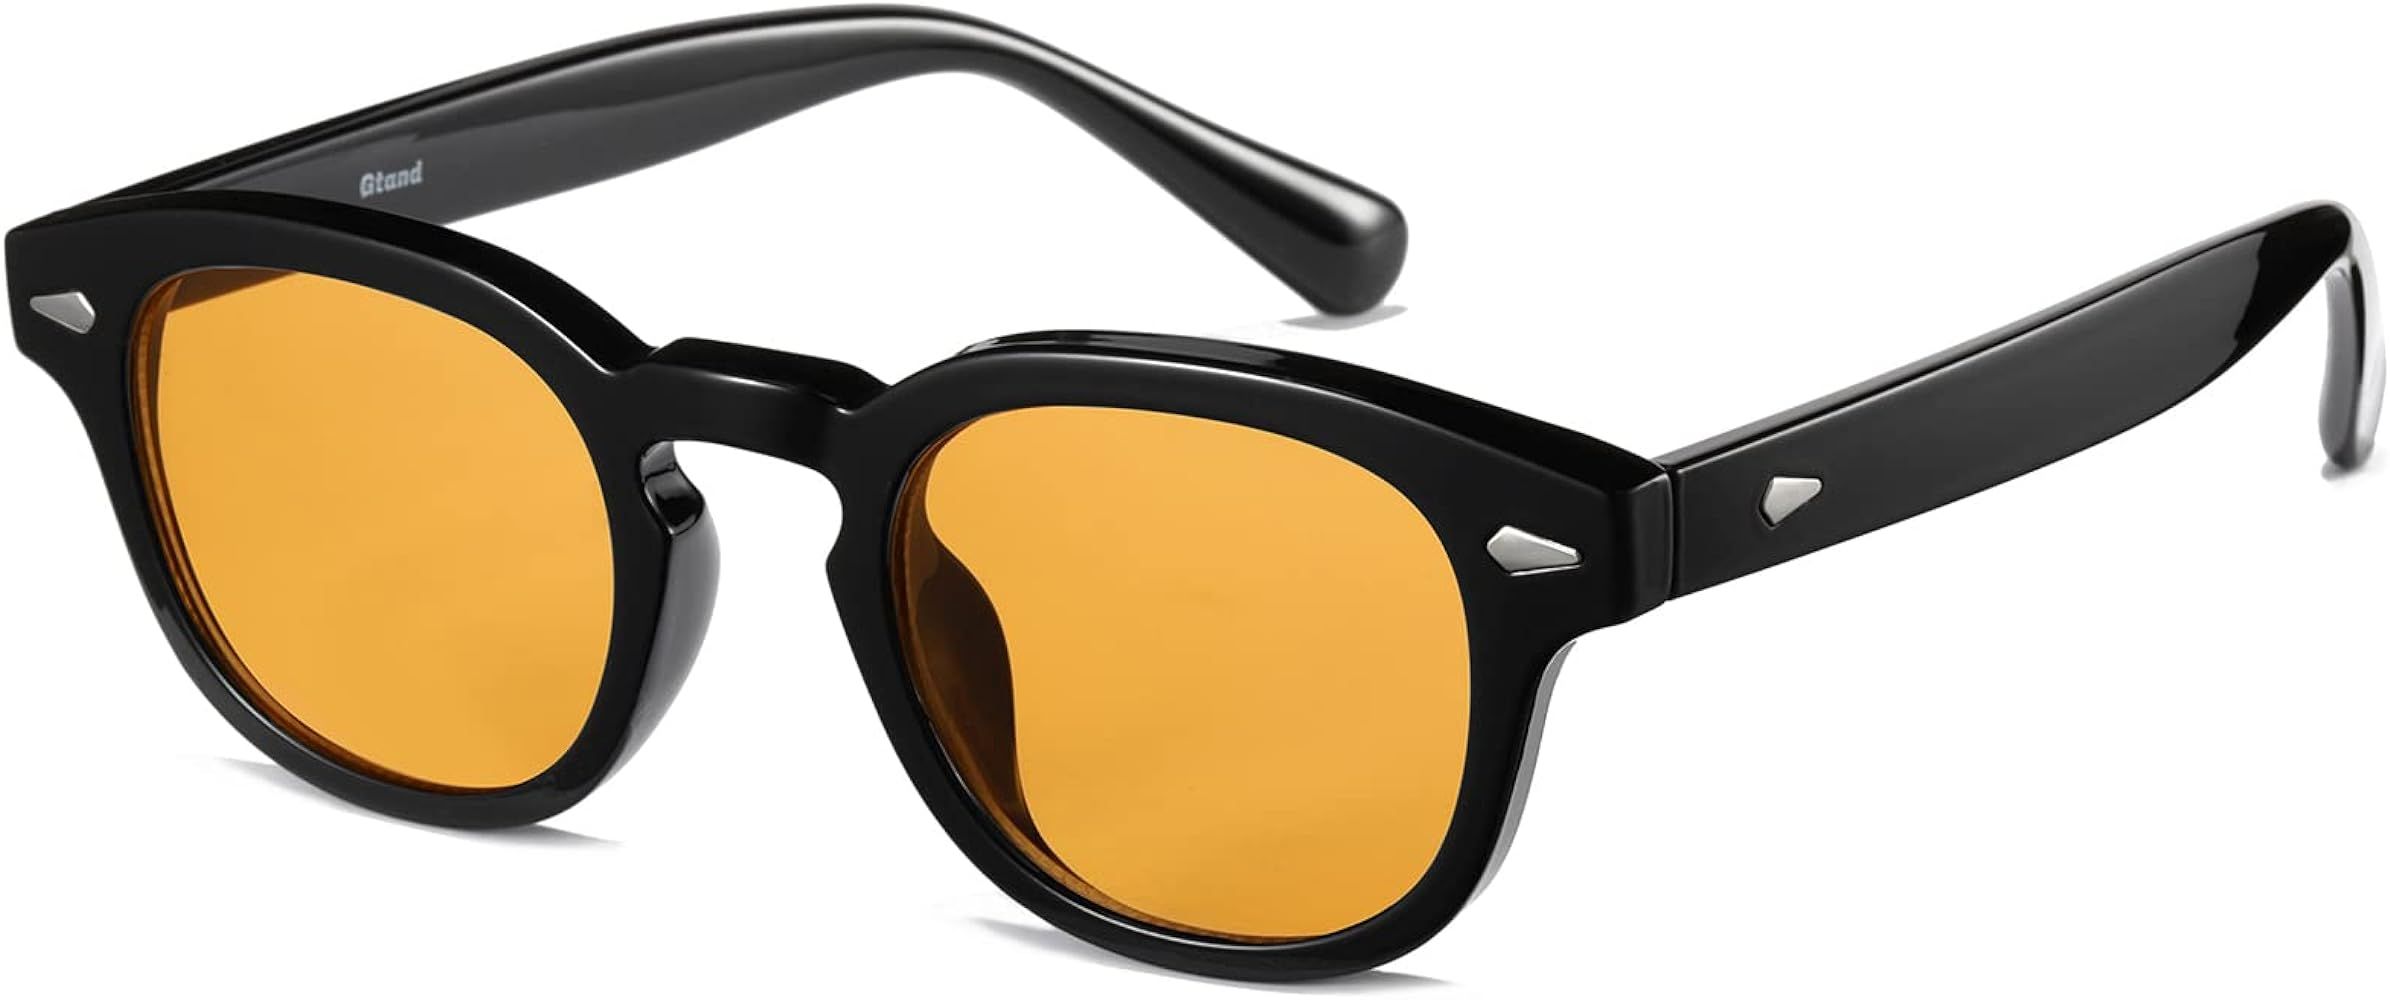 Gtand Unisex Vintage Retro Round Style Tinted Sunglasses For Men Women Fashion Circle Sun Glasses... | Amazon (US)